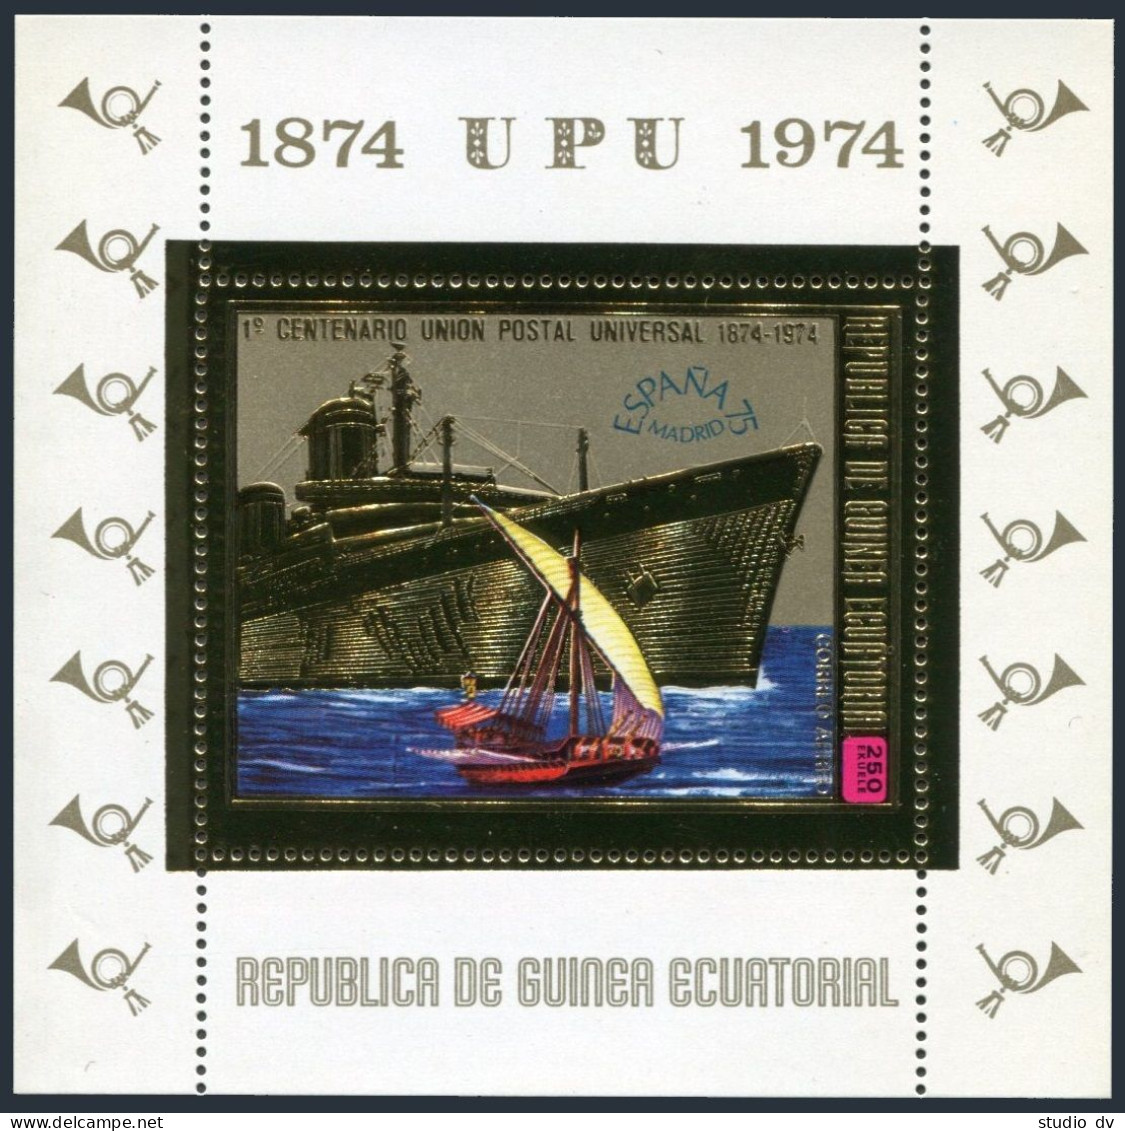 Eq Guinea Mi Bl.140-142,MNH. UPU-100,ESPANA-75: Ship,sailboat;Biplane,Concorde, - Guinée (1958-...)